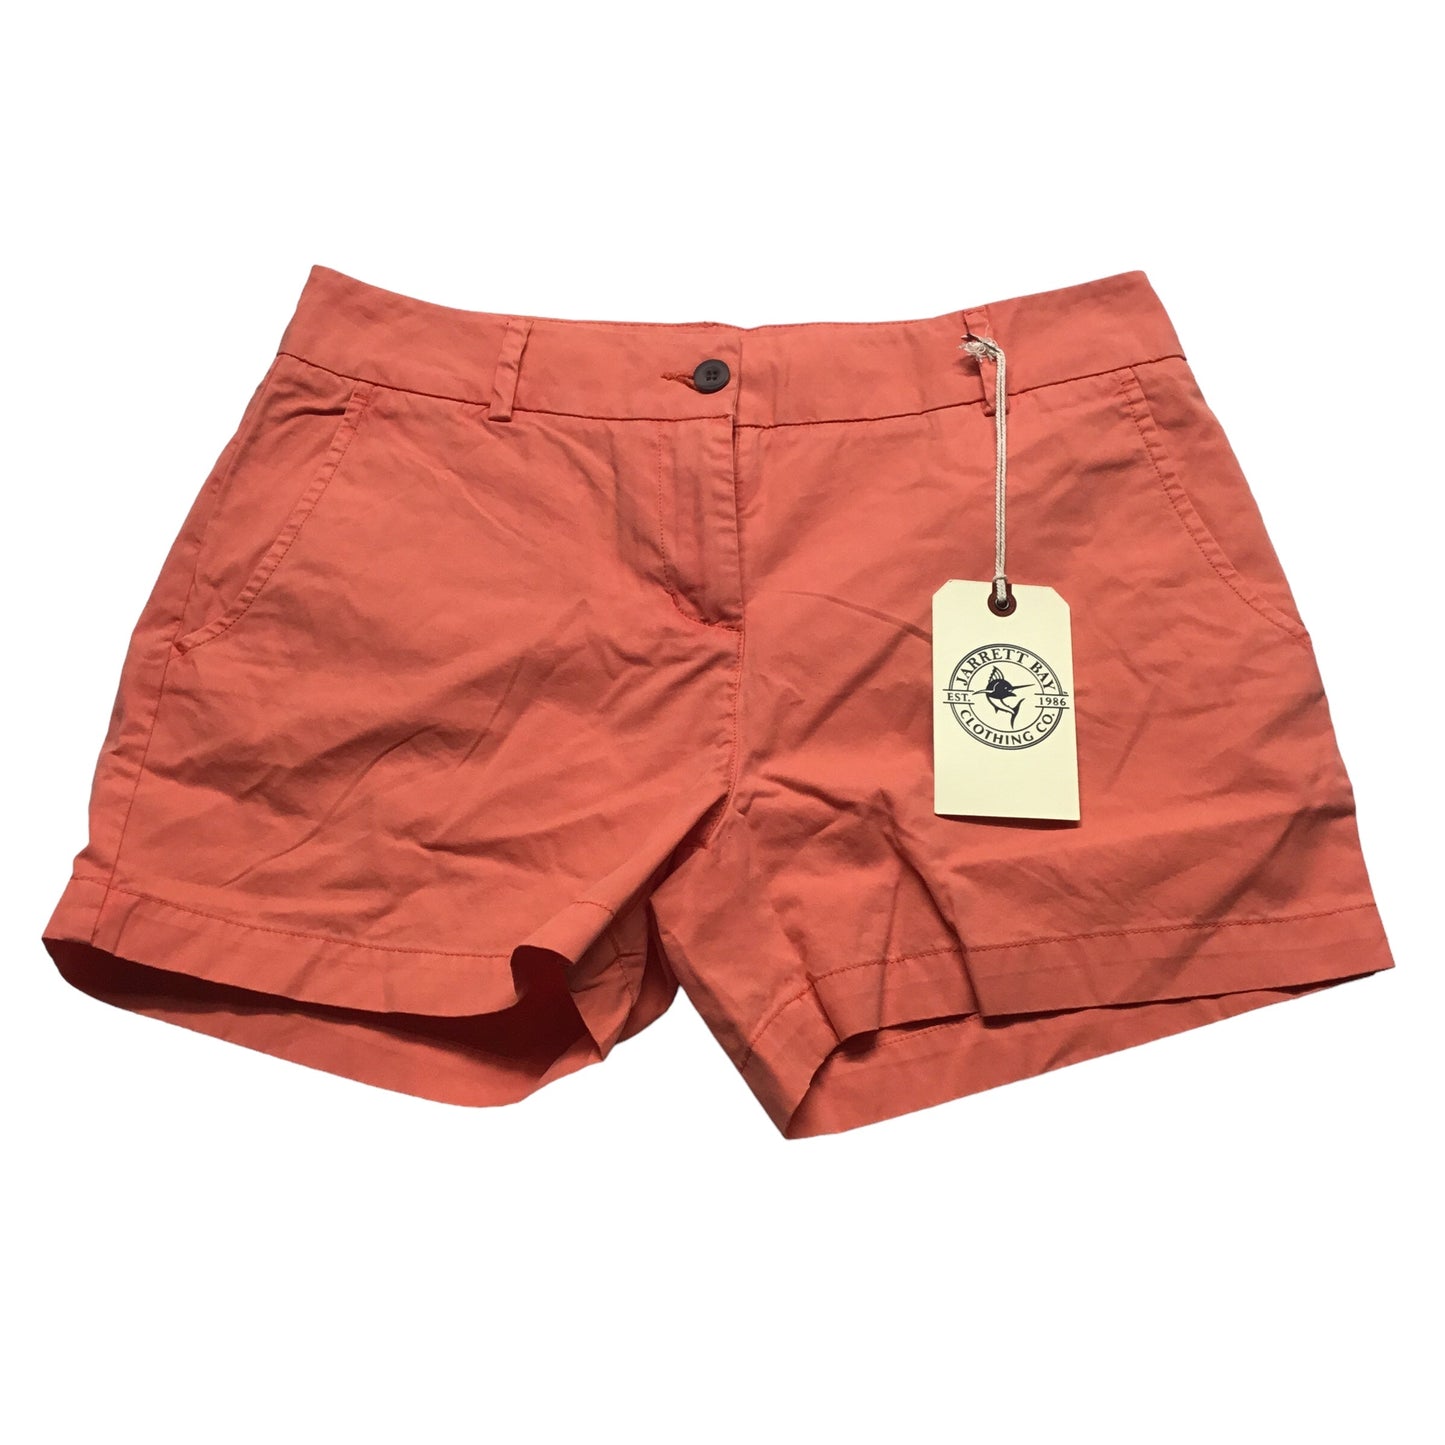 Orange Shorts Clothes Mentor, Size 8